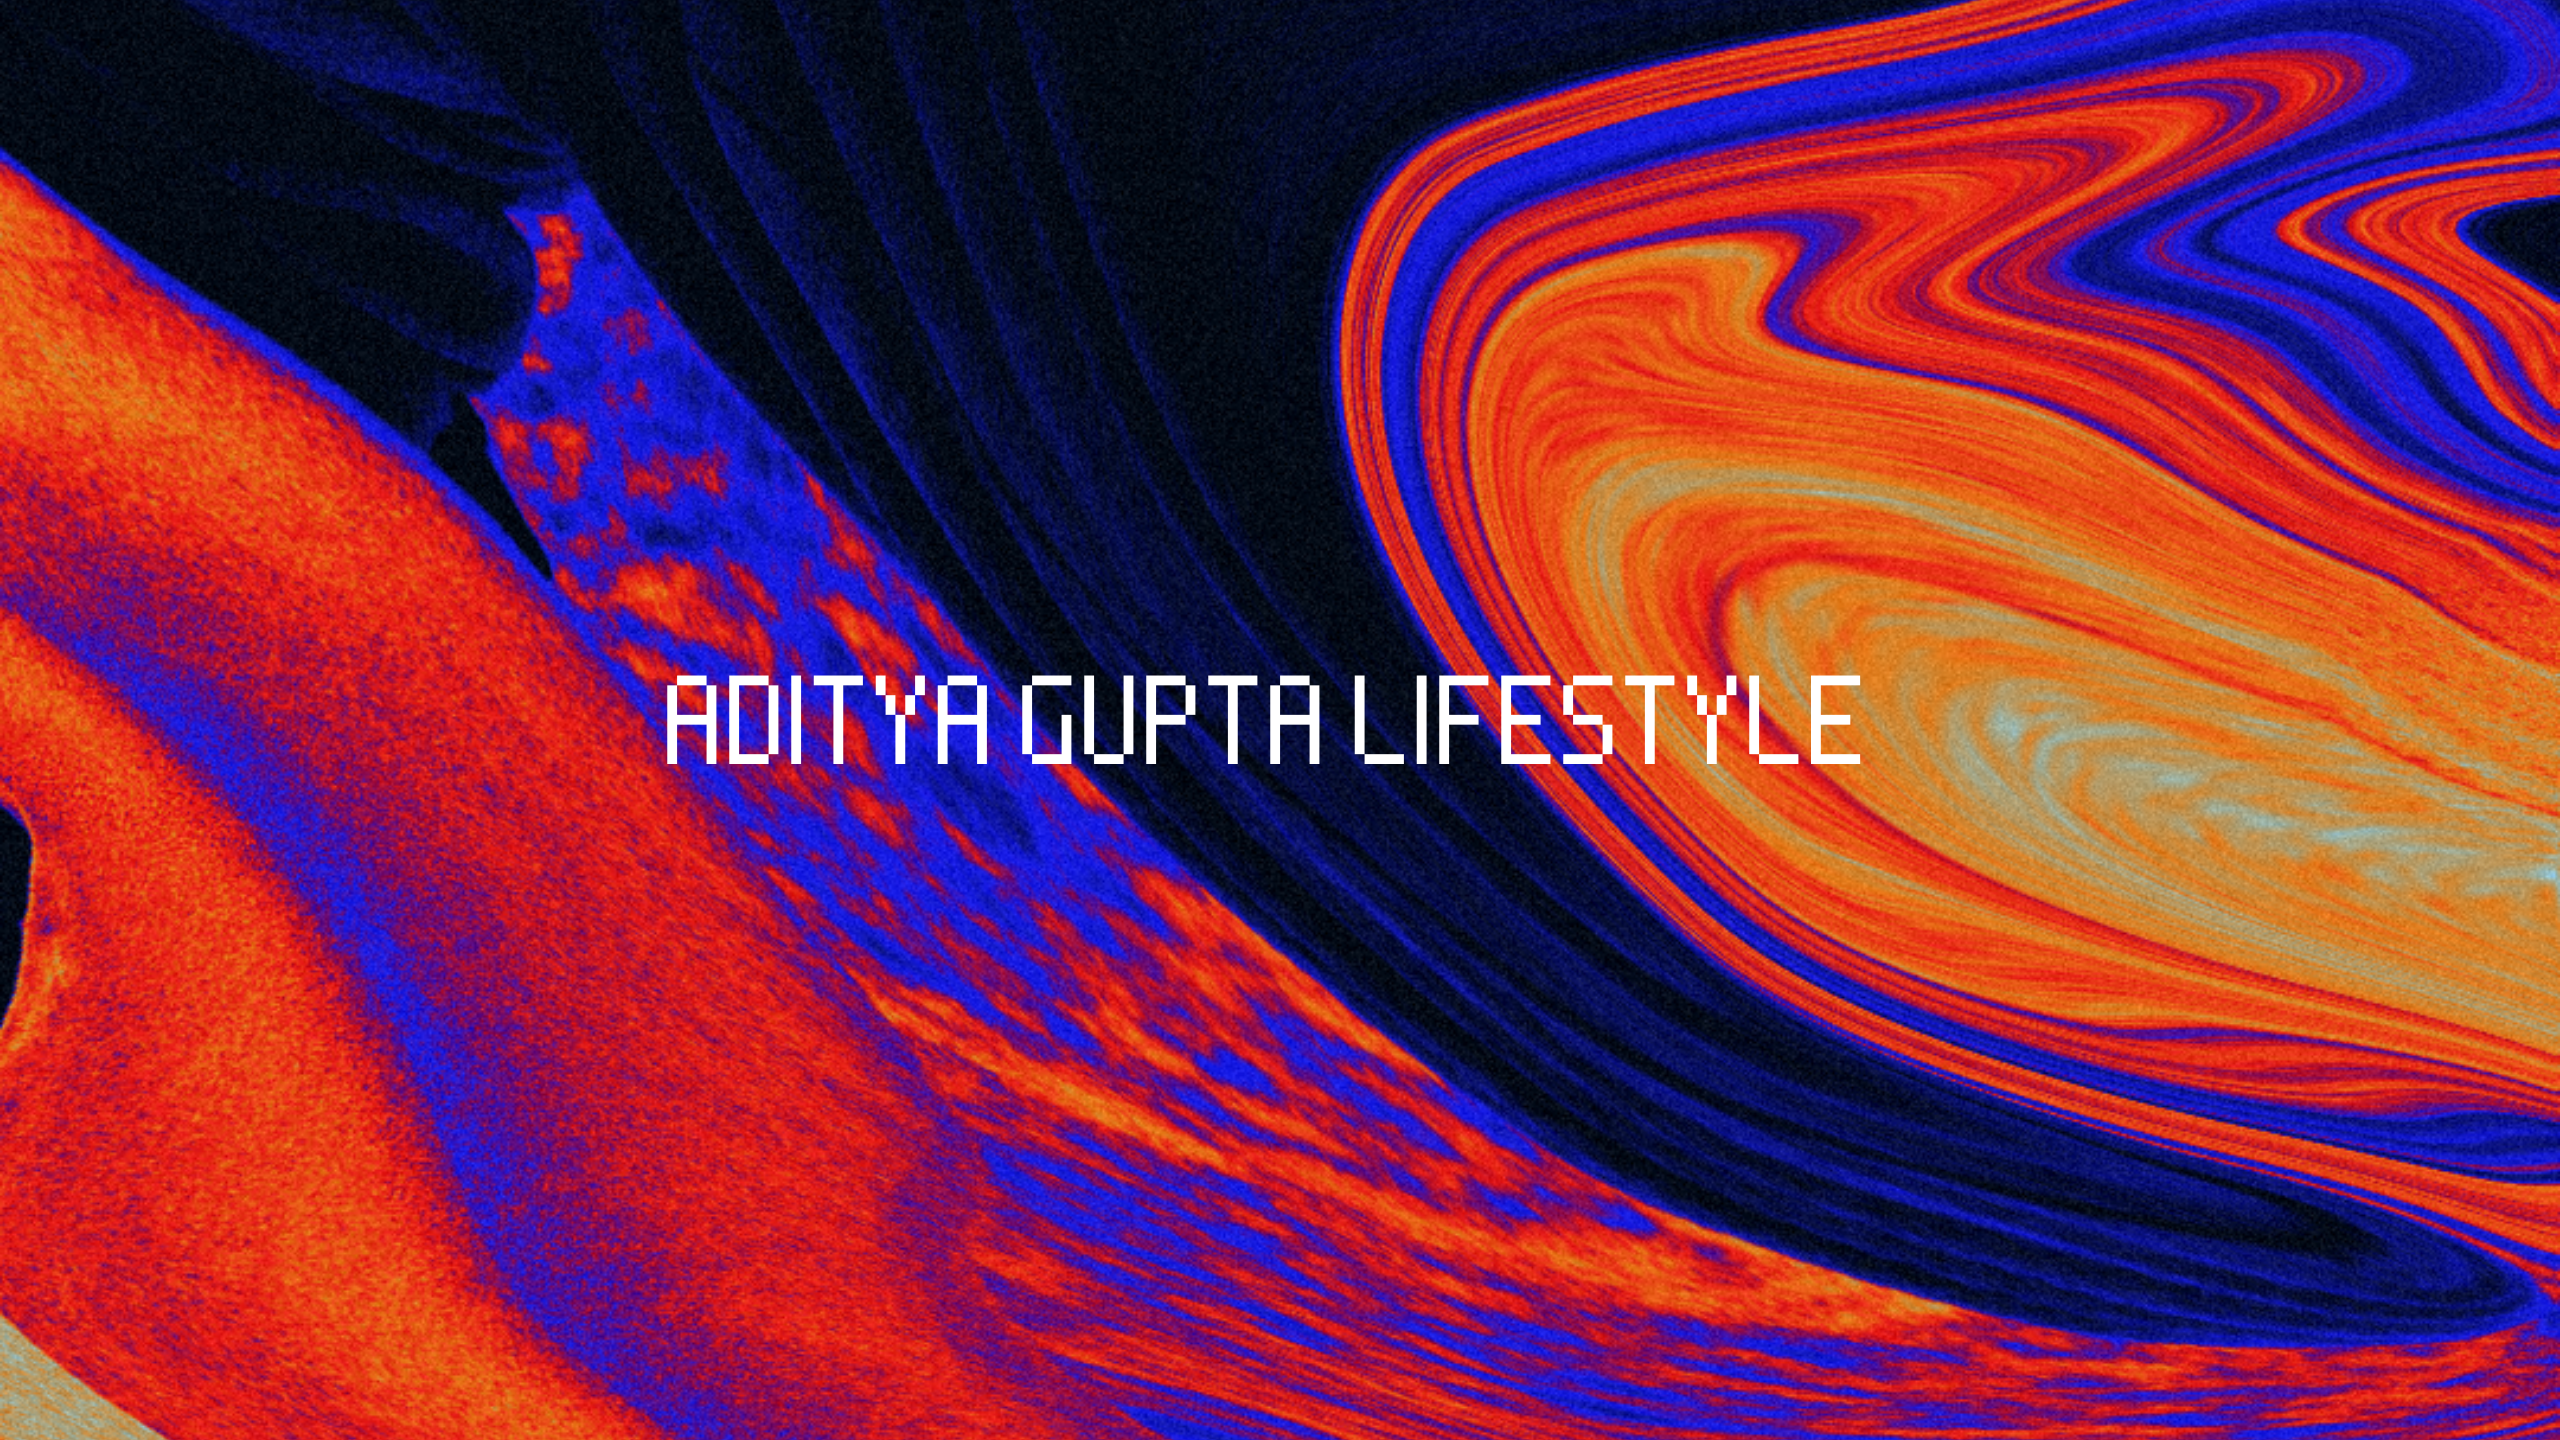 Aditya Gupta Lifestyle